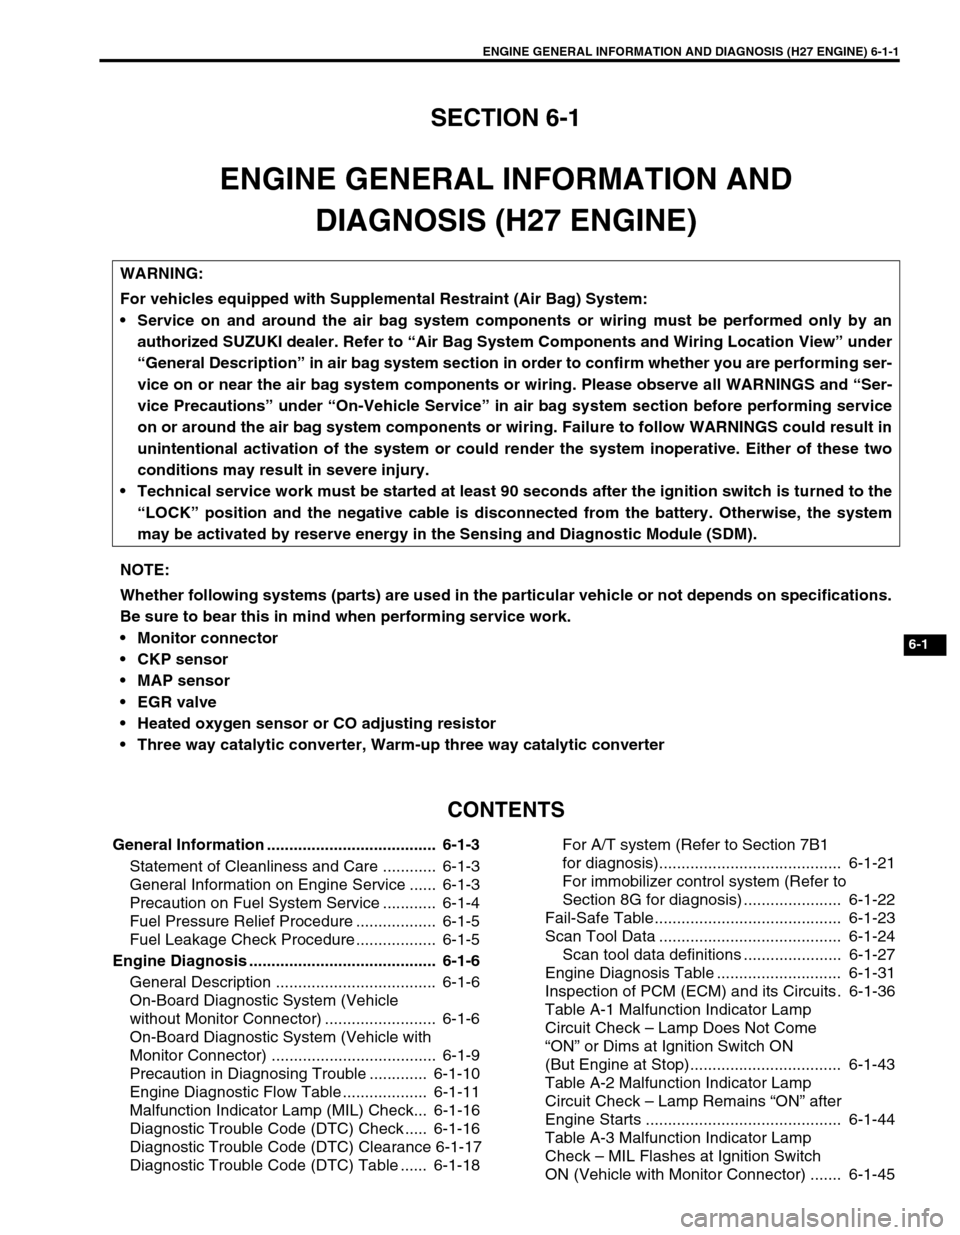 SUZUKI GRAND VITARA 2001 2.G Service Manual ENGINE GENERAL INFORMATION AND DIAGNOSIS (H27 ENGINE) 6-1-1
6-1
SECTION 6-1
ENGINE GENERAL INFORMATION AND 
DIAGNOSIS (H27 ENGINE)
CONTENTS
General Information ......................................  